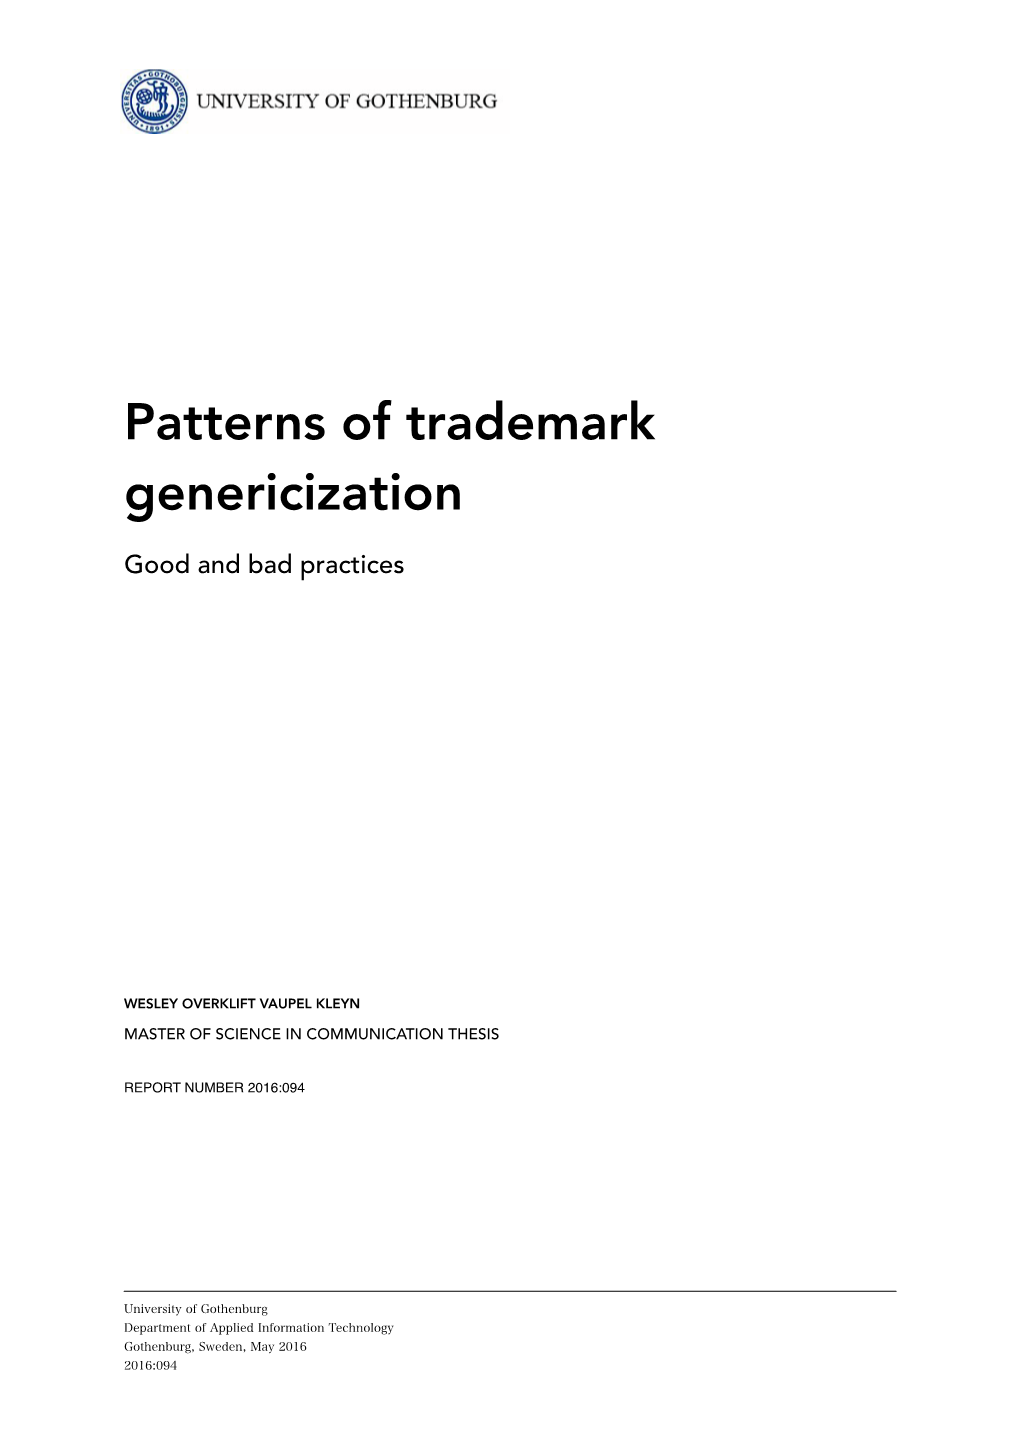 Patterns of Trademark Genericization